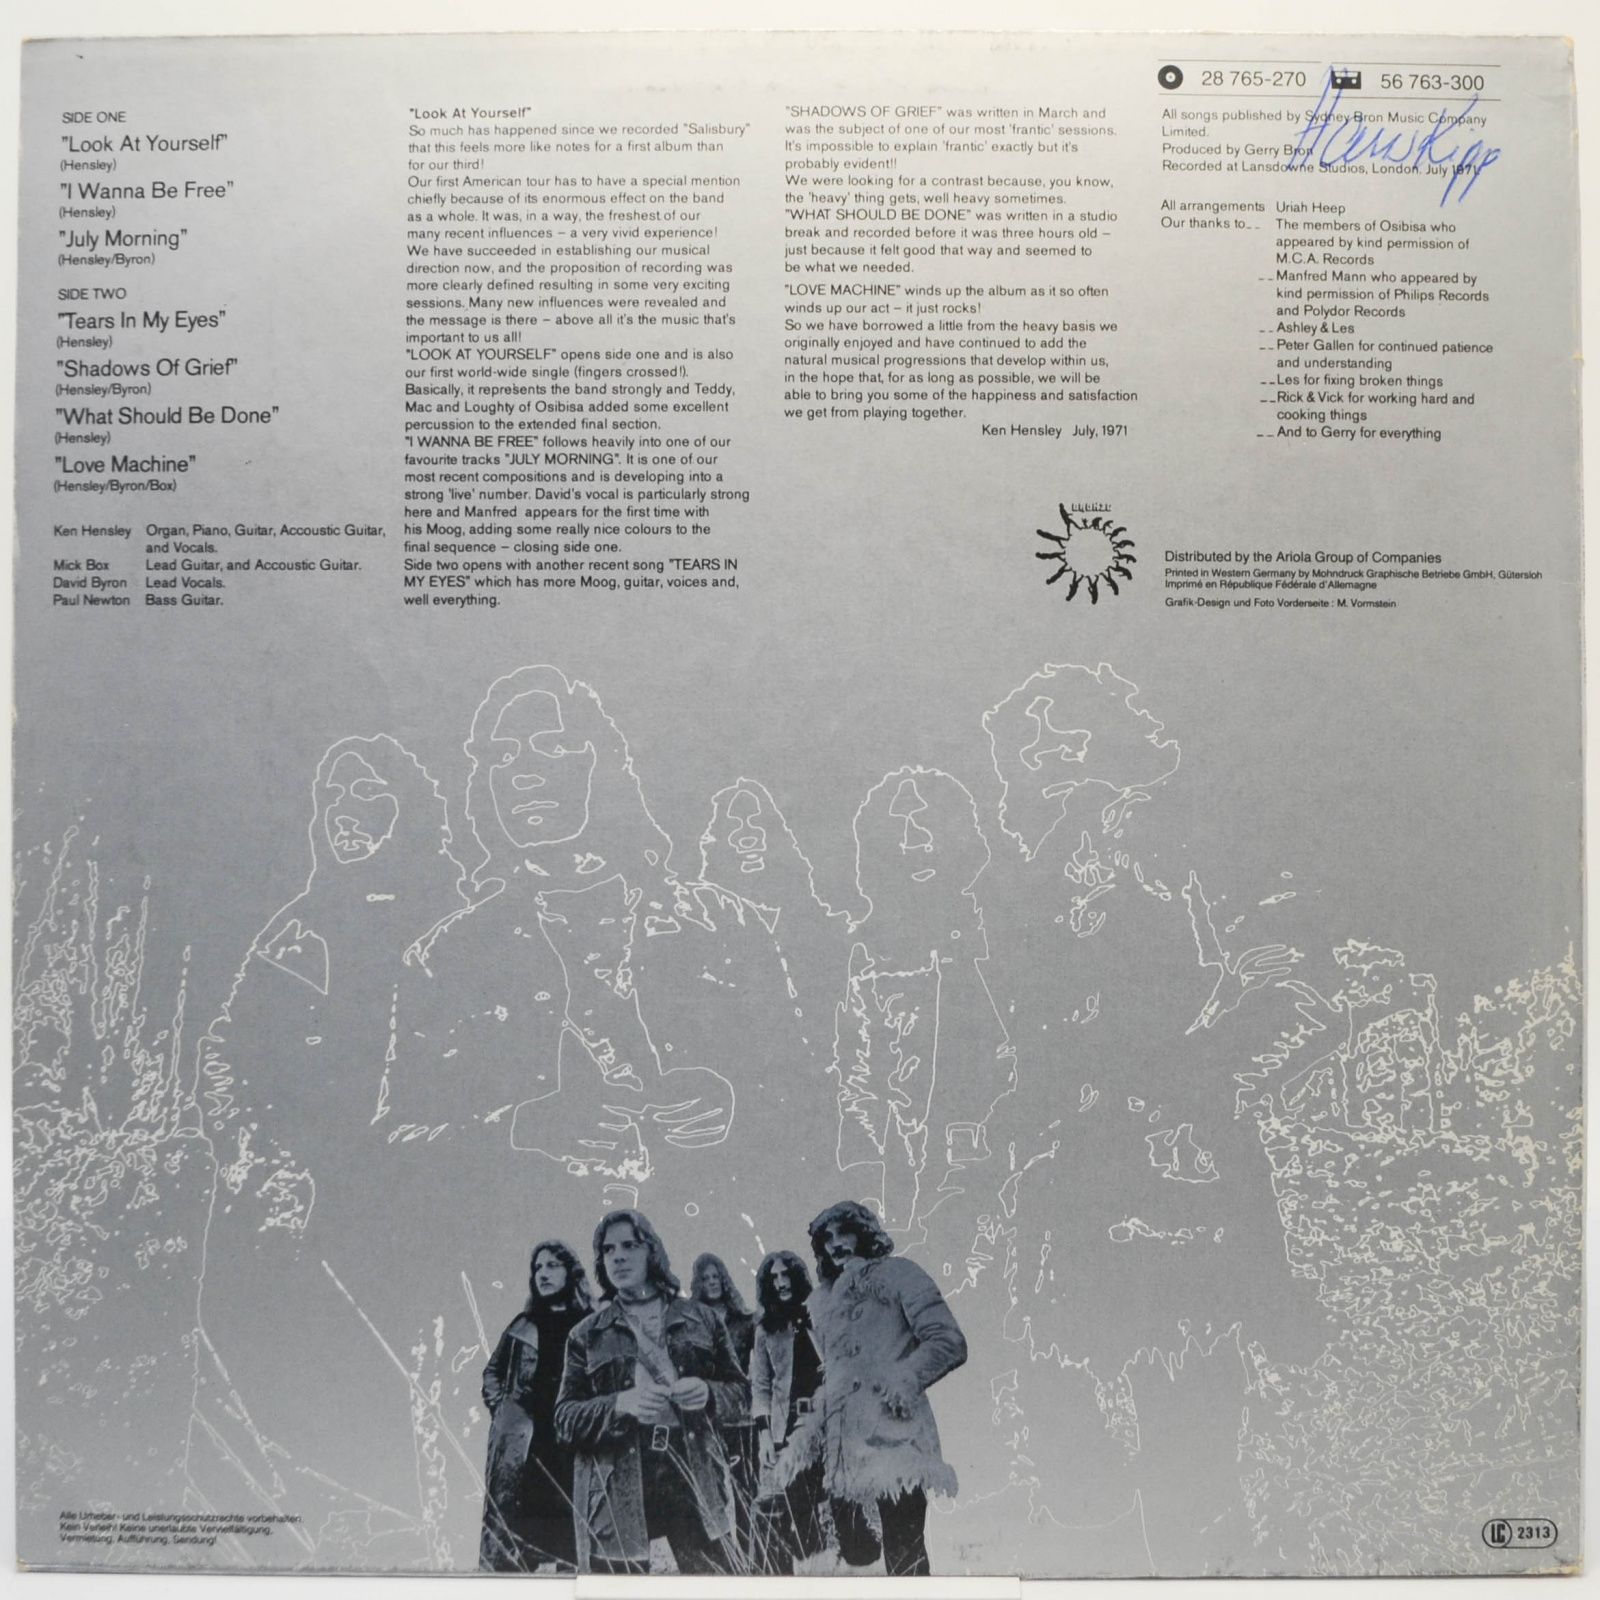 Uriah Heep — Look At Yourself, 1971